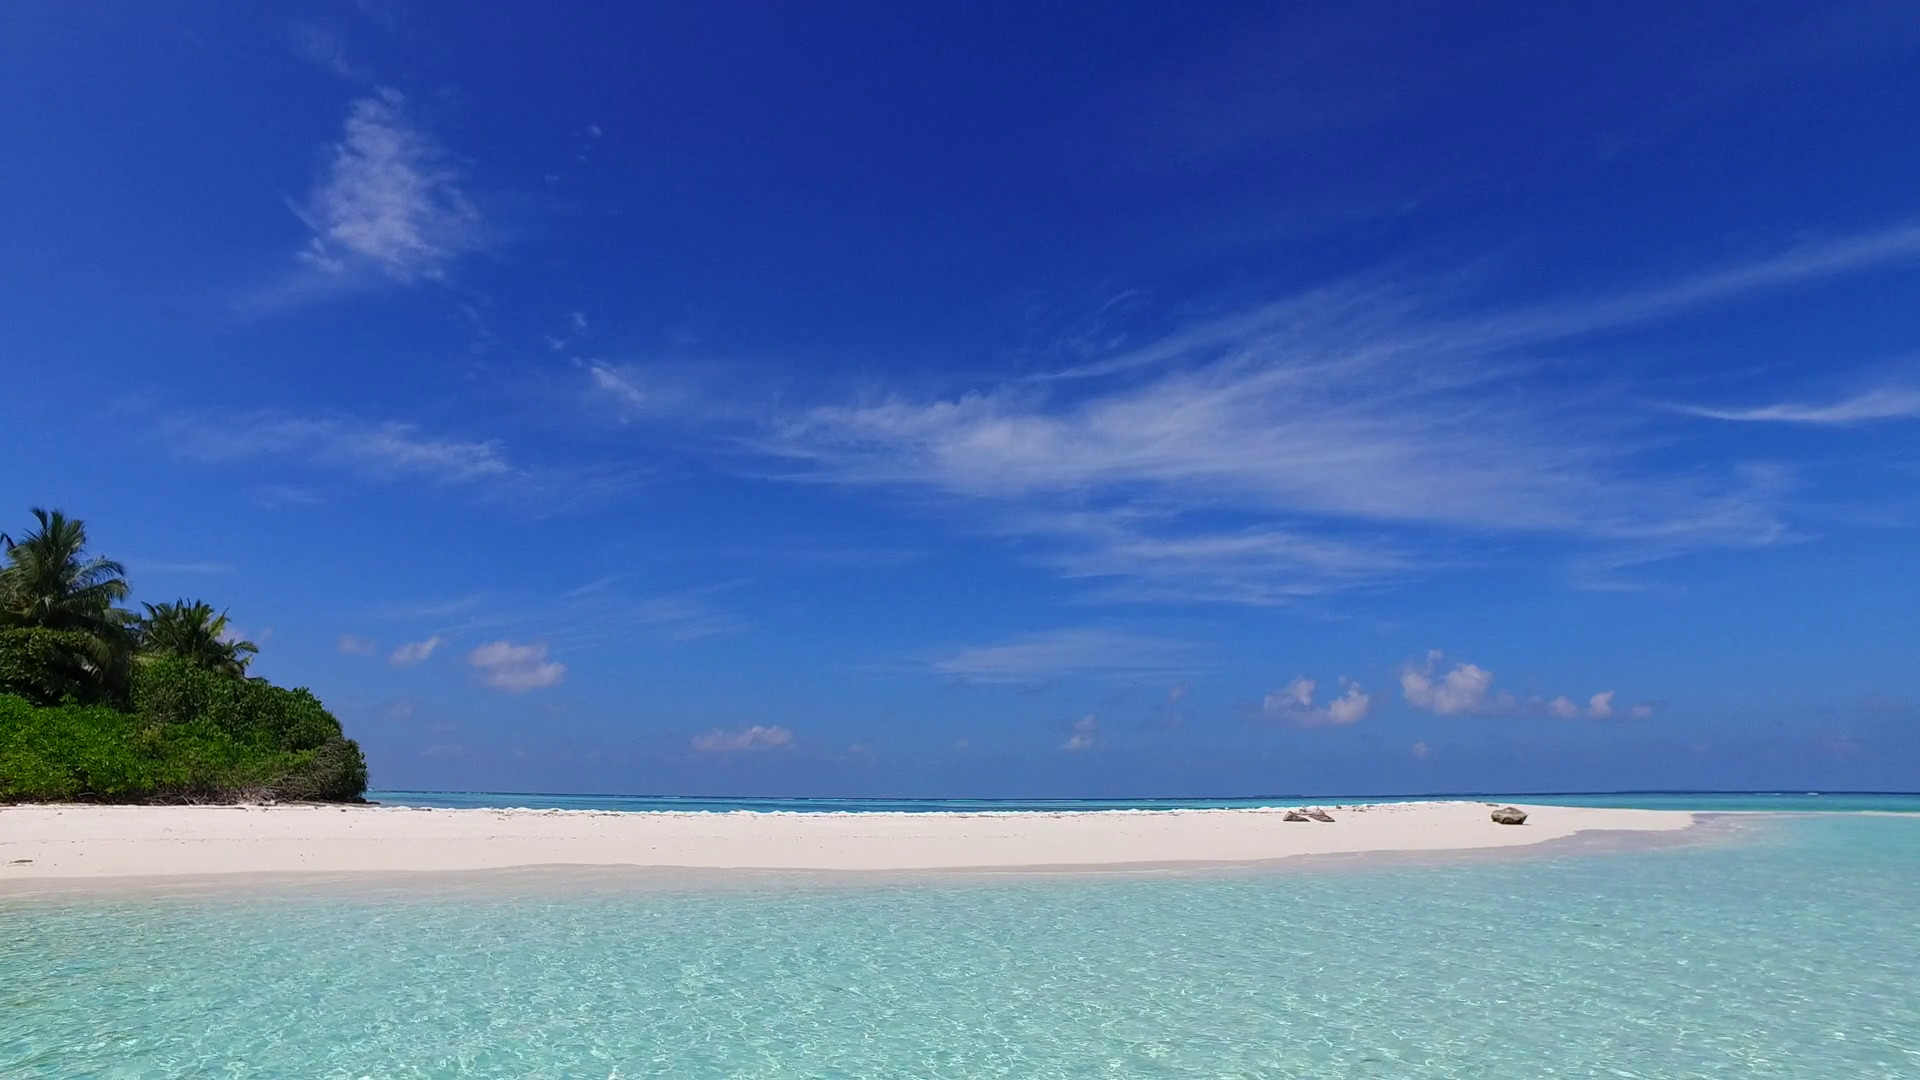 1920x1080 v01130 Maldives beautiful beach background white sandy tropical paradise  island with blue sky sea water ocean 4k Stock Video Footage - VideoBlocks